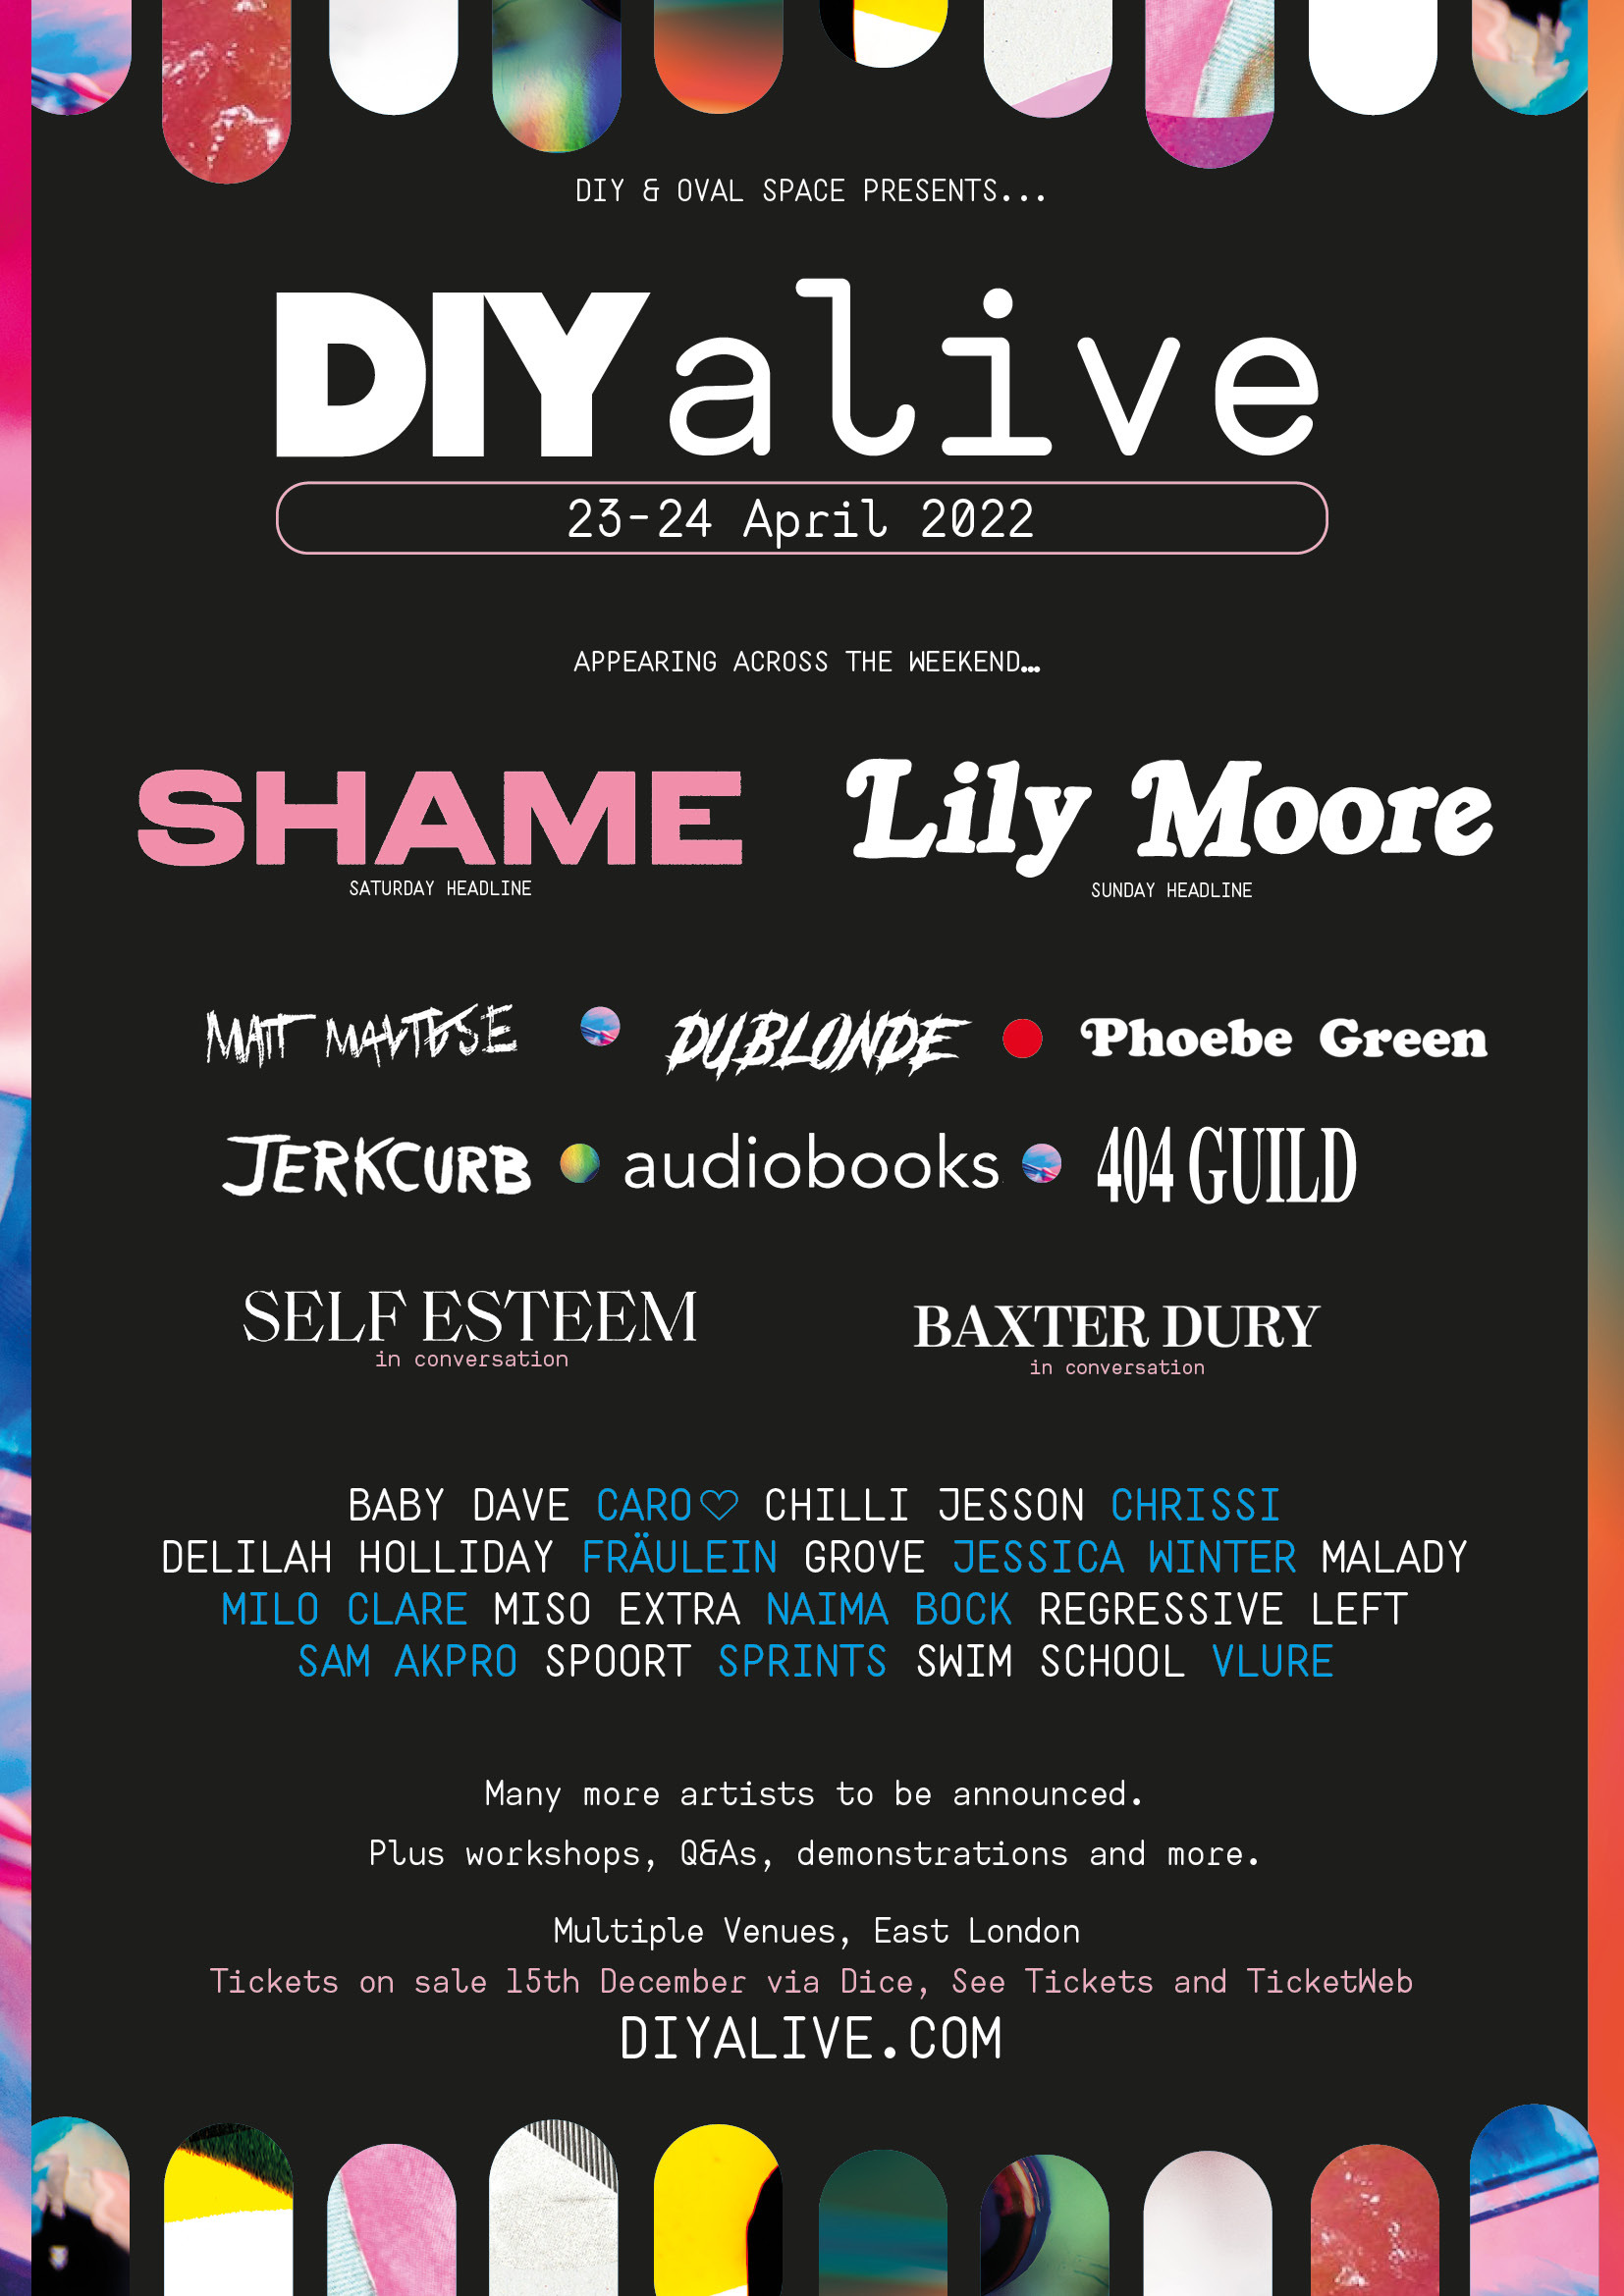 Shame, Lily Moore, Matt Maltese, Du Blonde & loads more announced for DIY Alive 2022